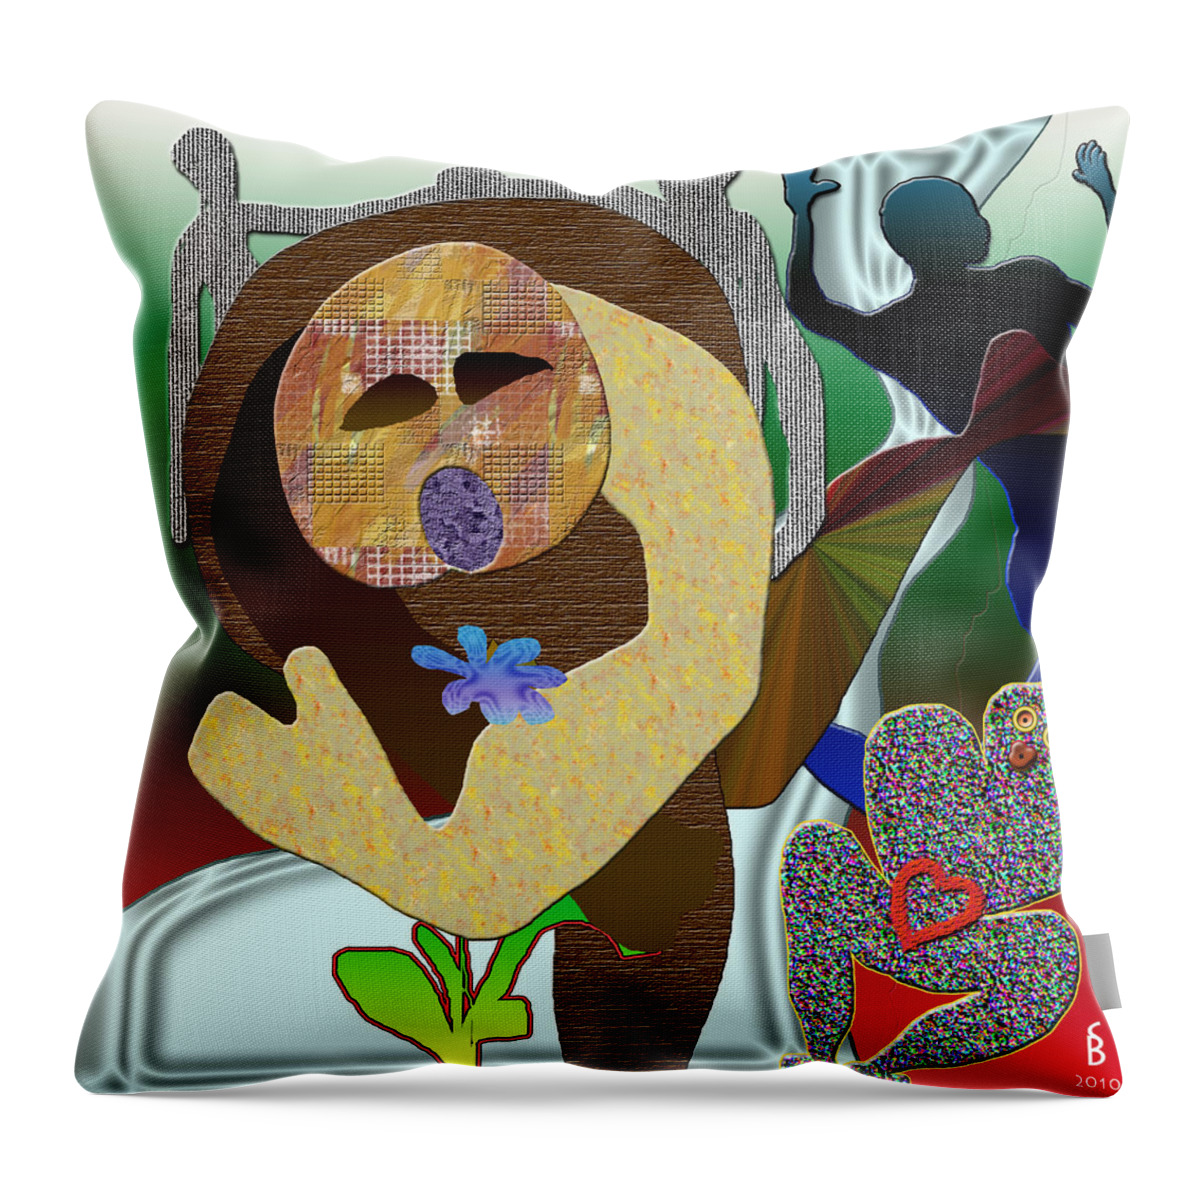 Flower Throw Pillow featuring the digital art Whitout title by Sitara Bruns